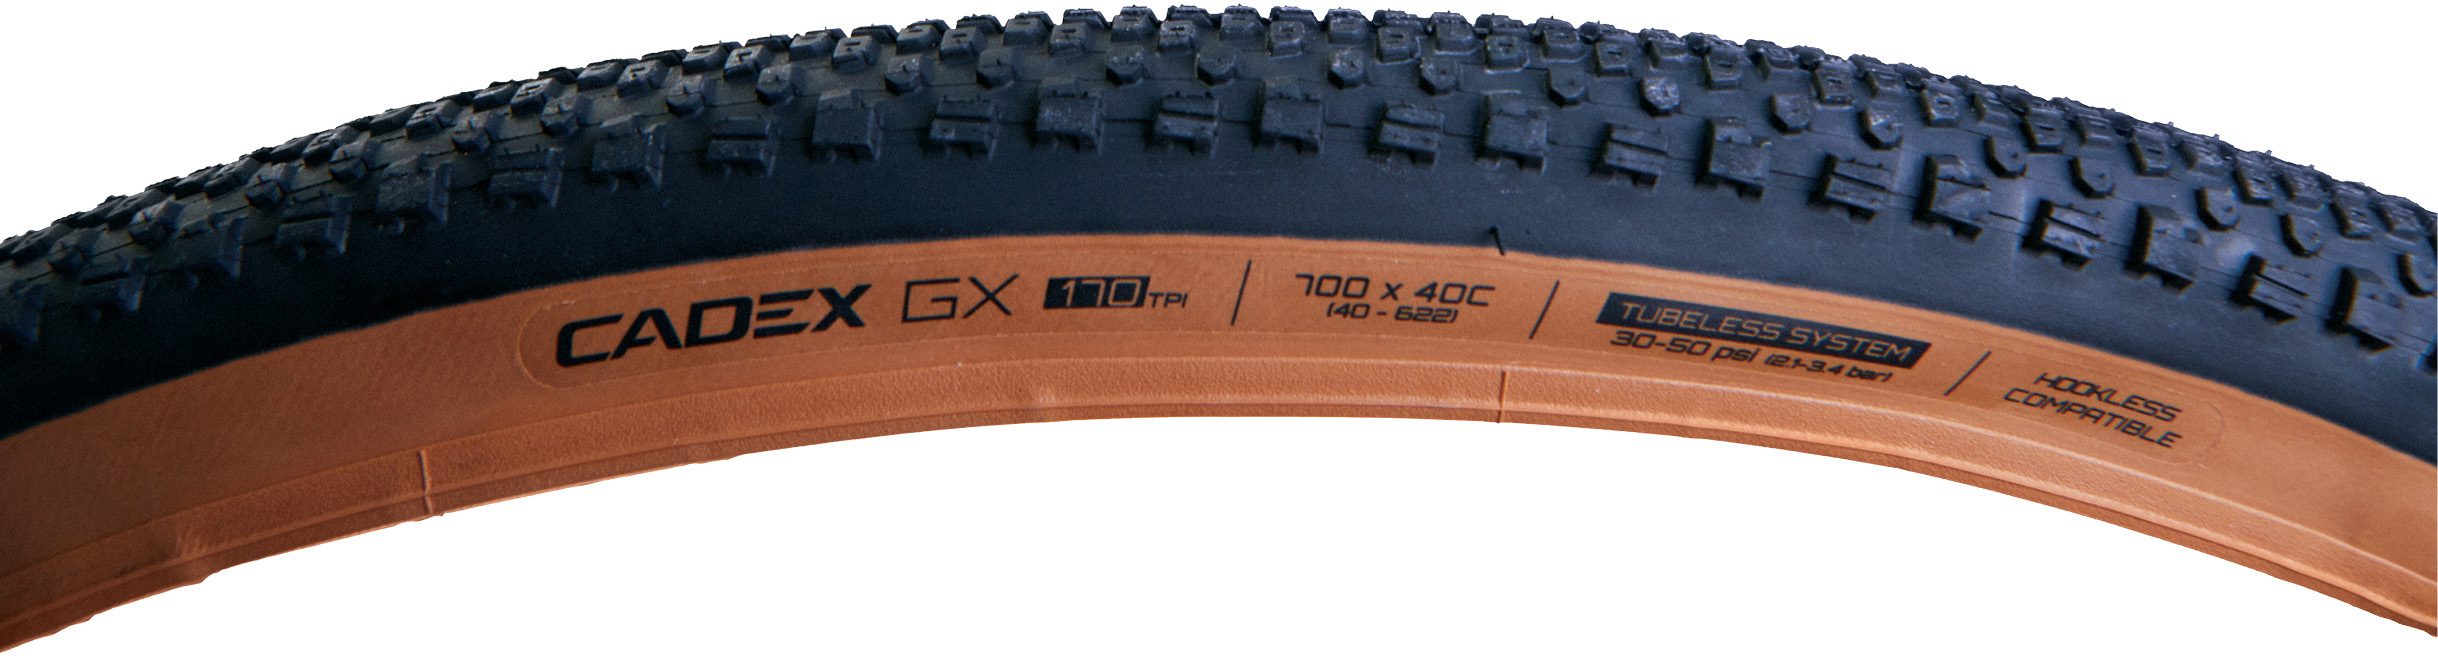 Cadex GX Tubeless Tire 700c